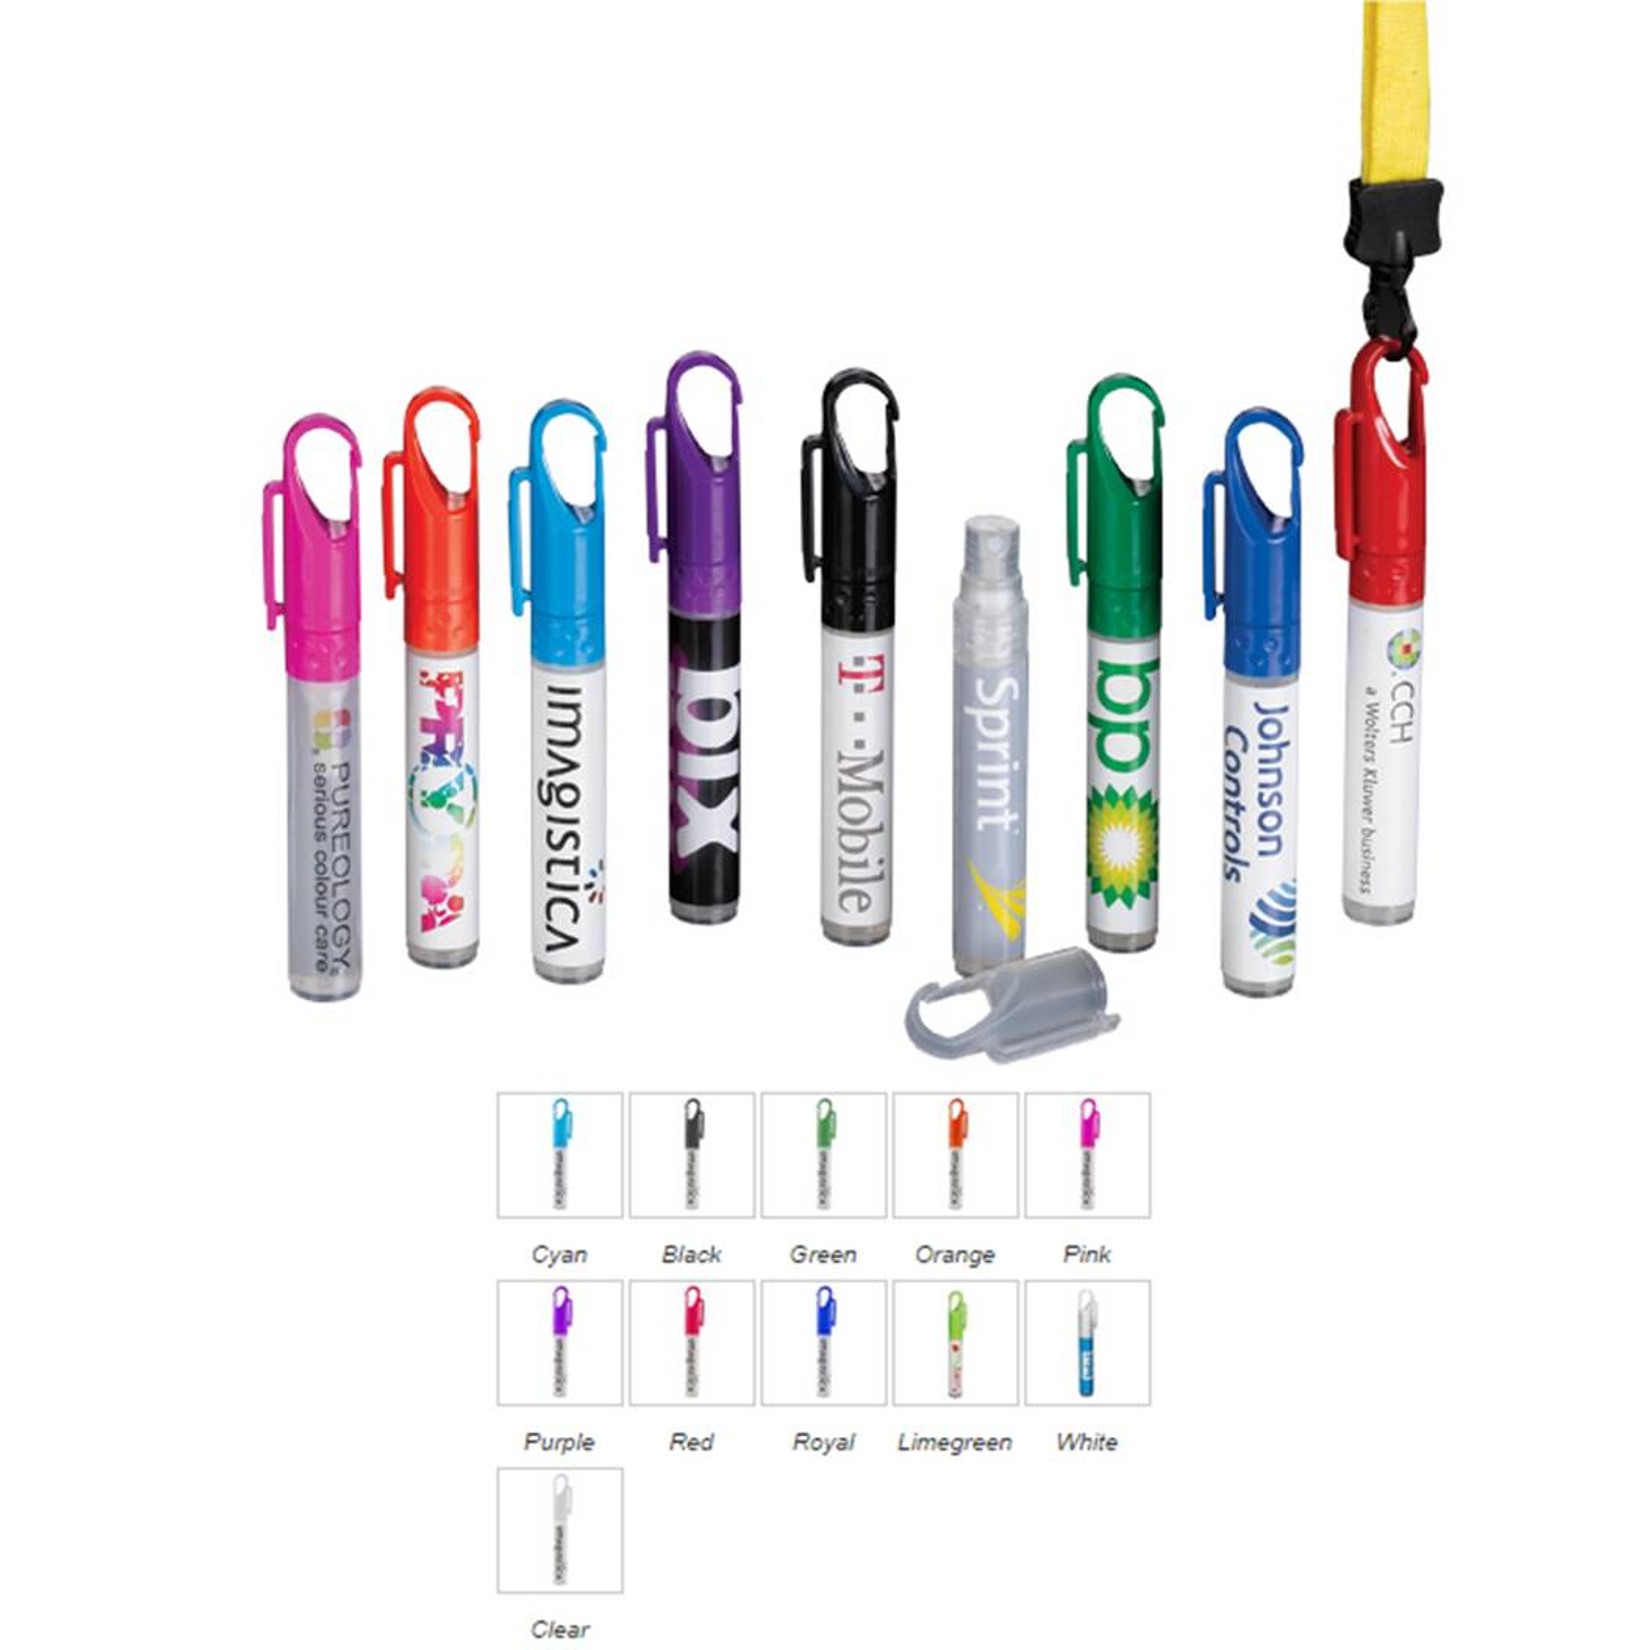 USA made 10 mL pen sanitizer customizable